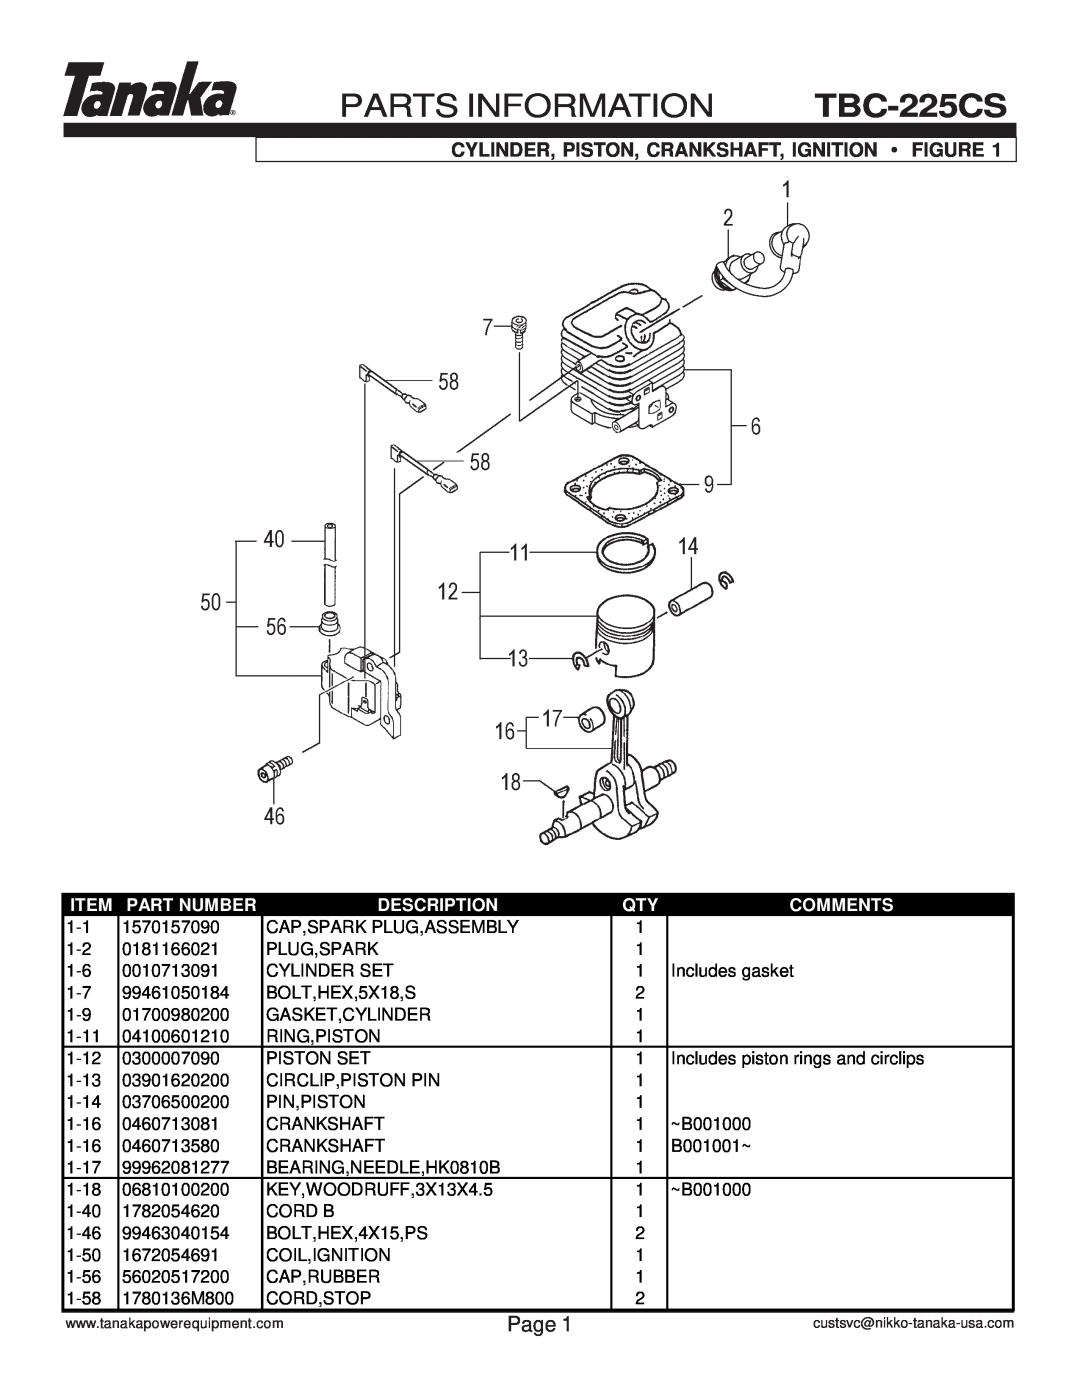 Tanaka TBC-225CS manual Parts Information, Page, Cylinder, Piston, Crankshaft, Ignition Figure, Part Number, Description 